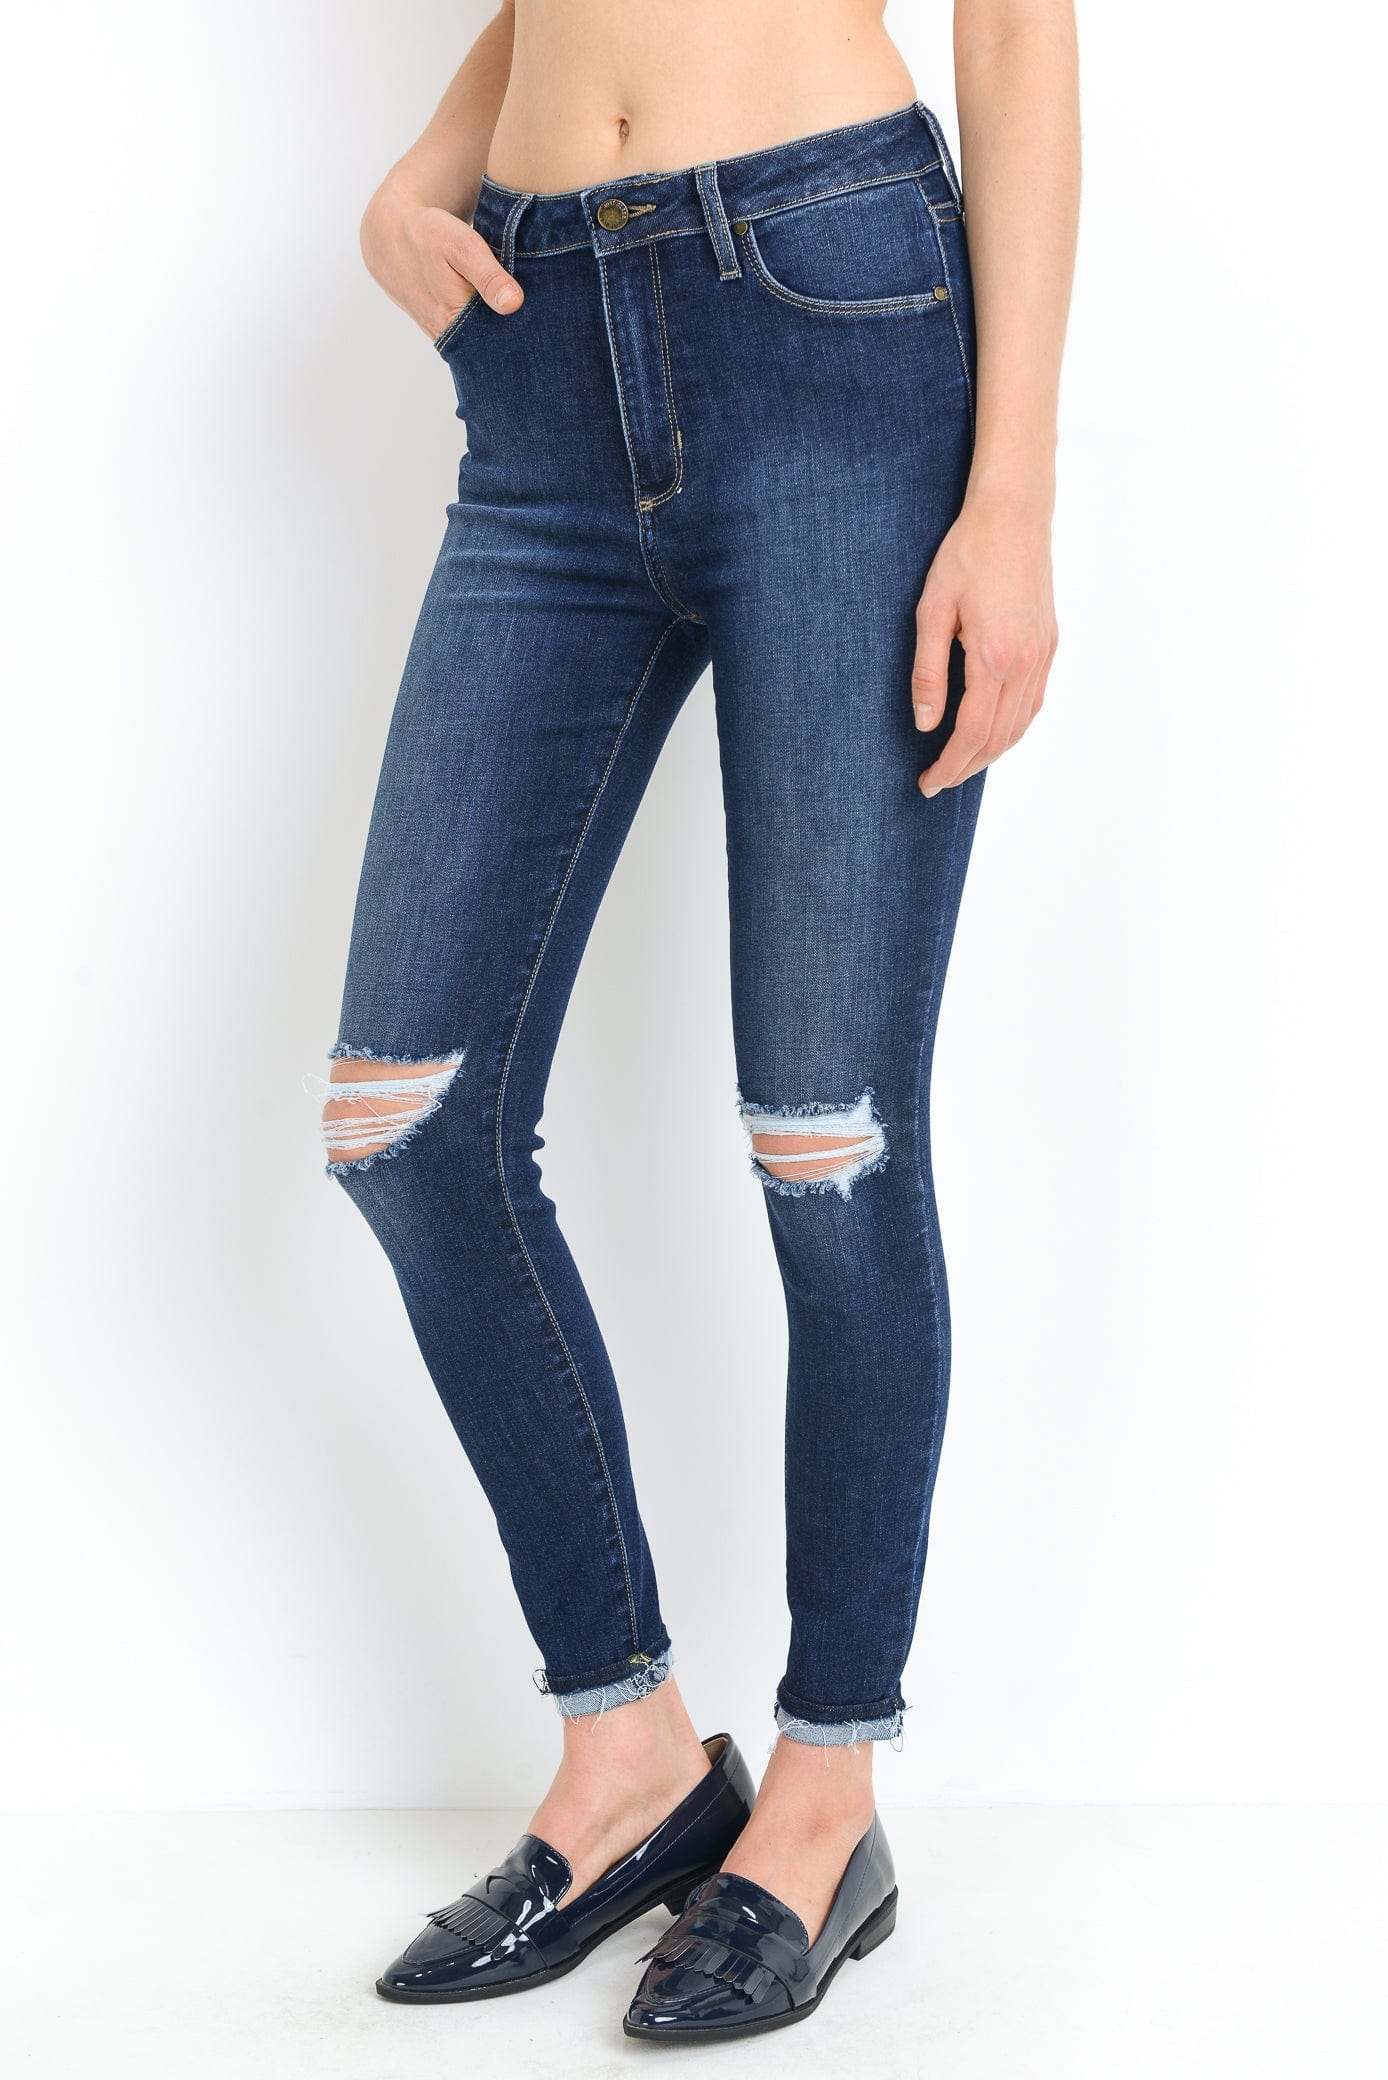 Best Petite Jeans for Short Women | Petite Dressing Pants